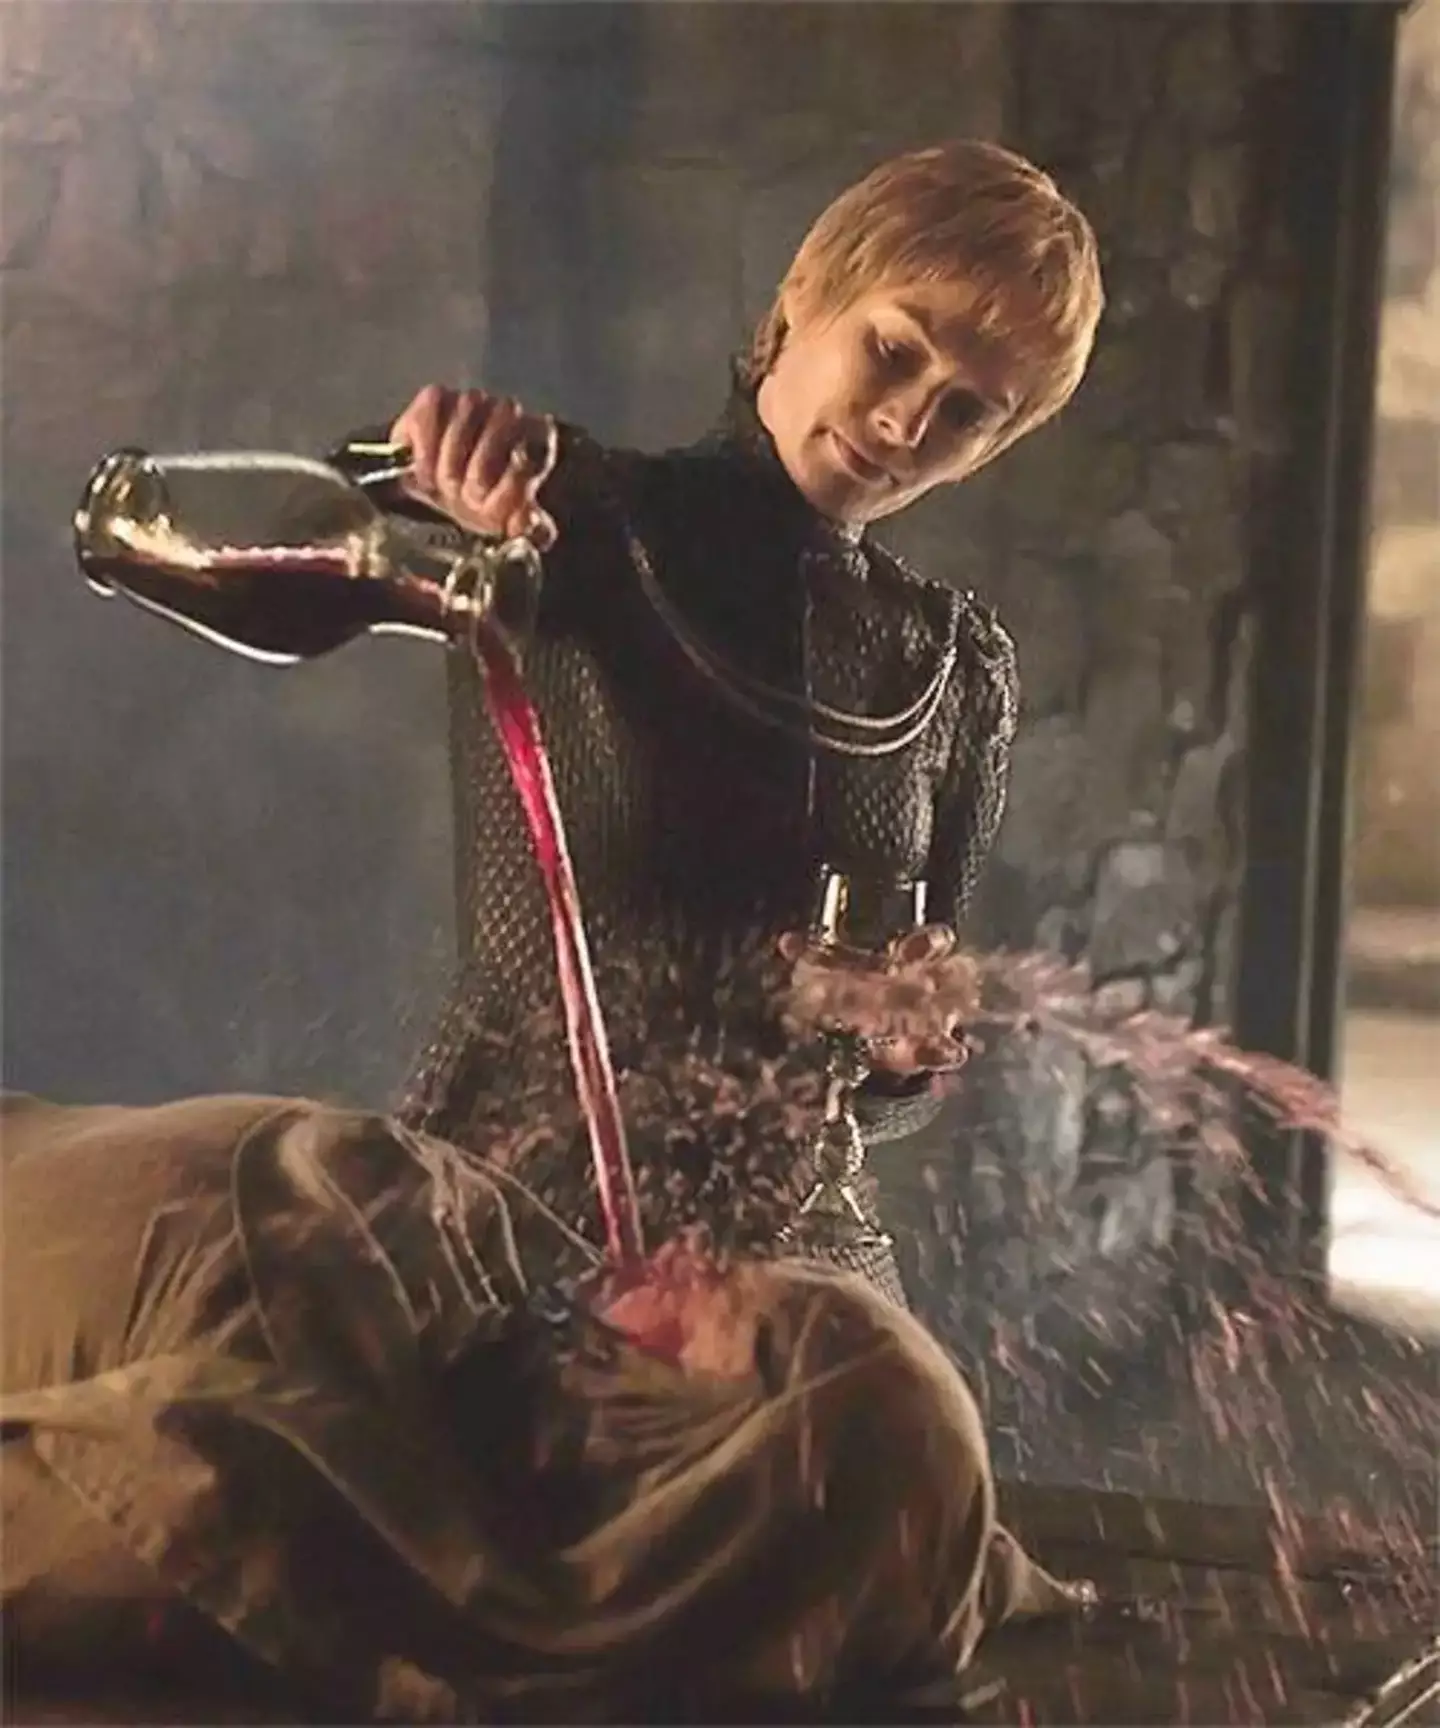 Cersei Lannister pouring wine on Septa Unella.